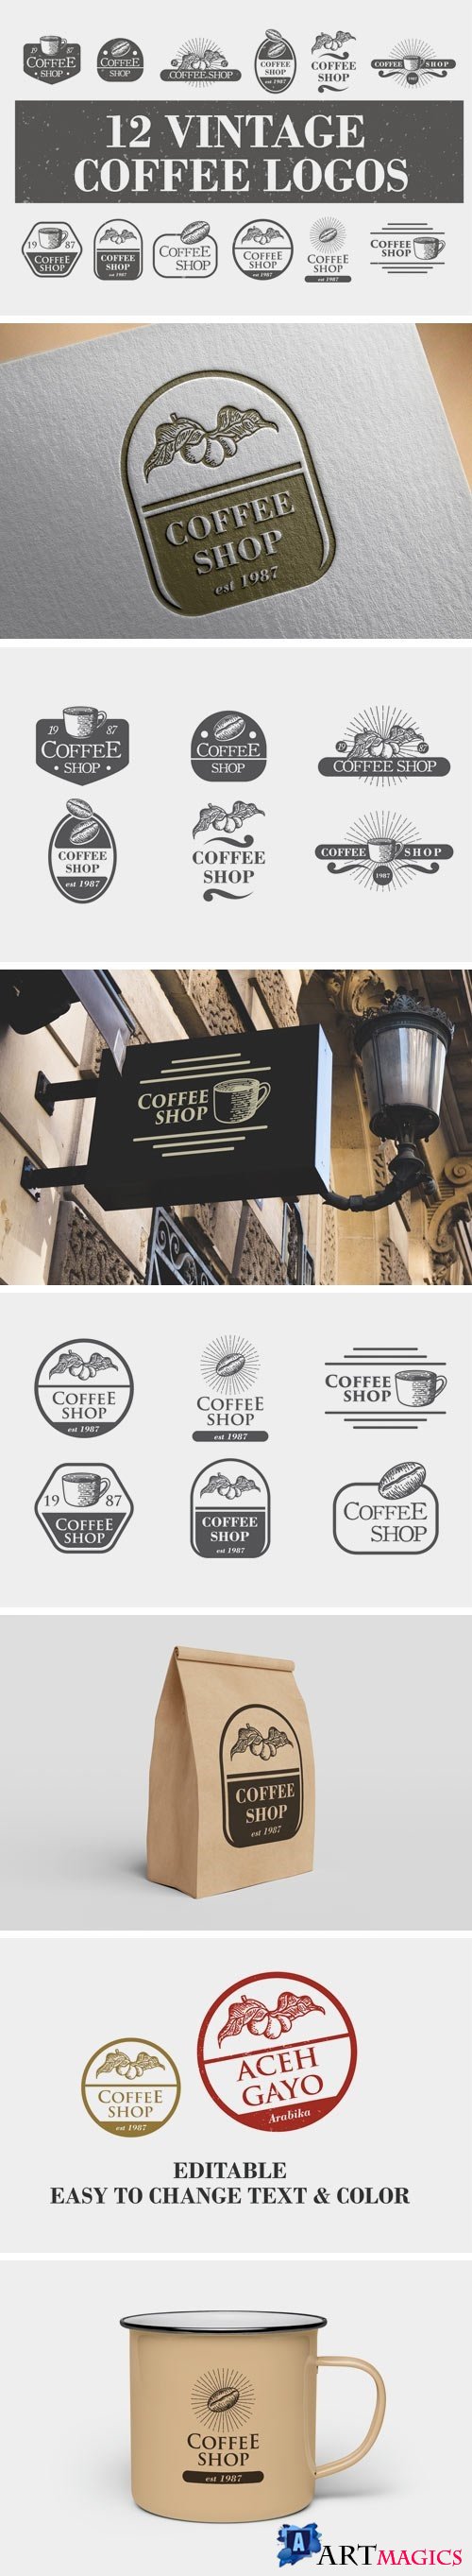 12 Vintage Coffee Logos & Badge 2478086